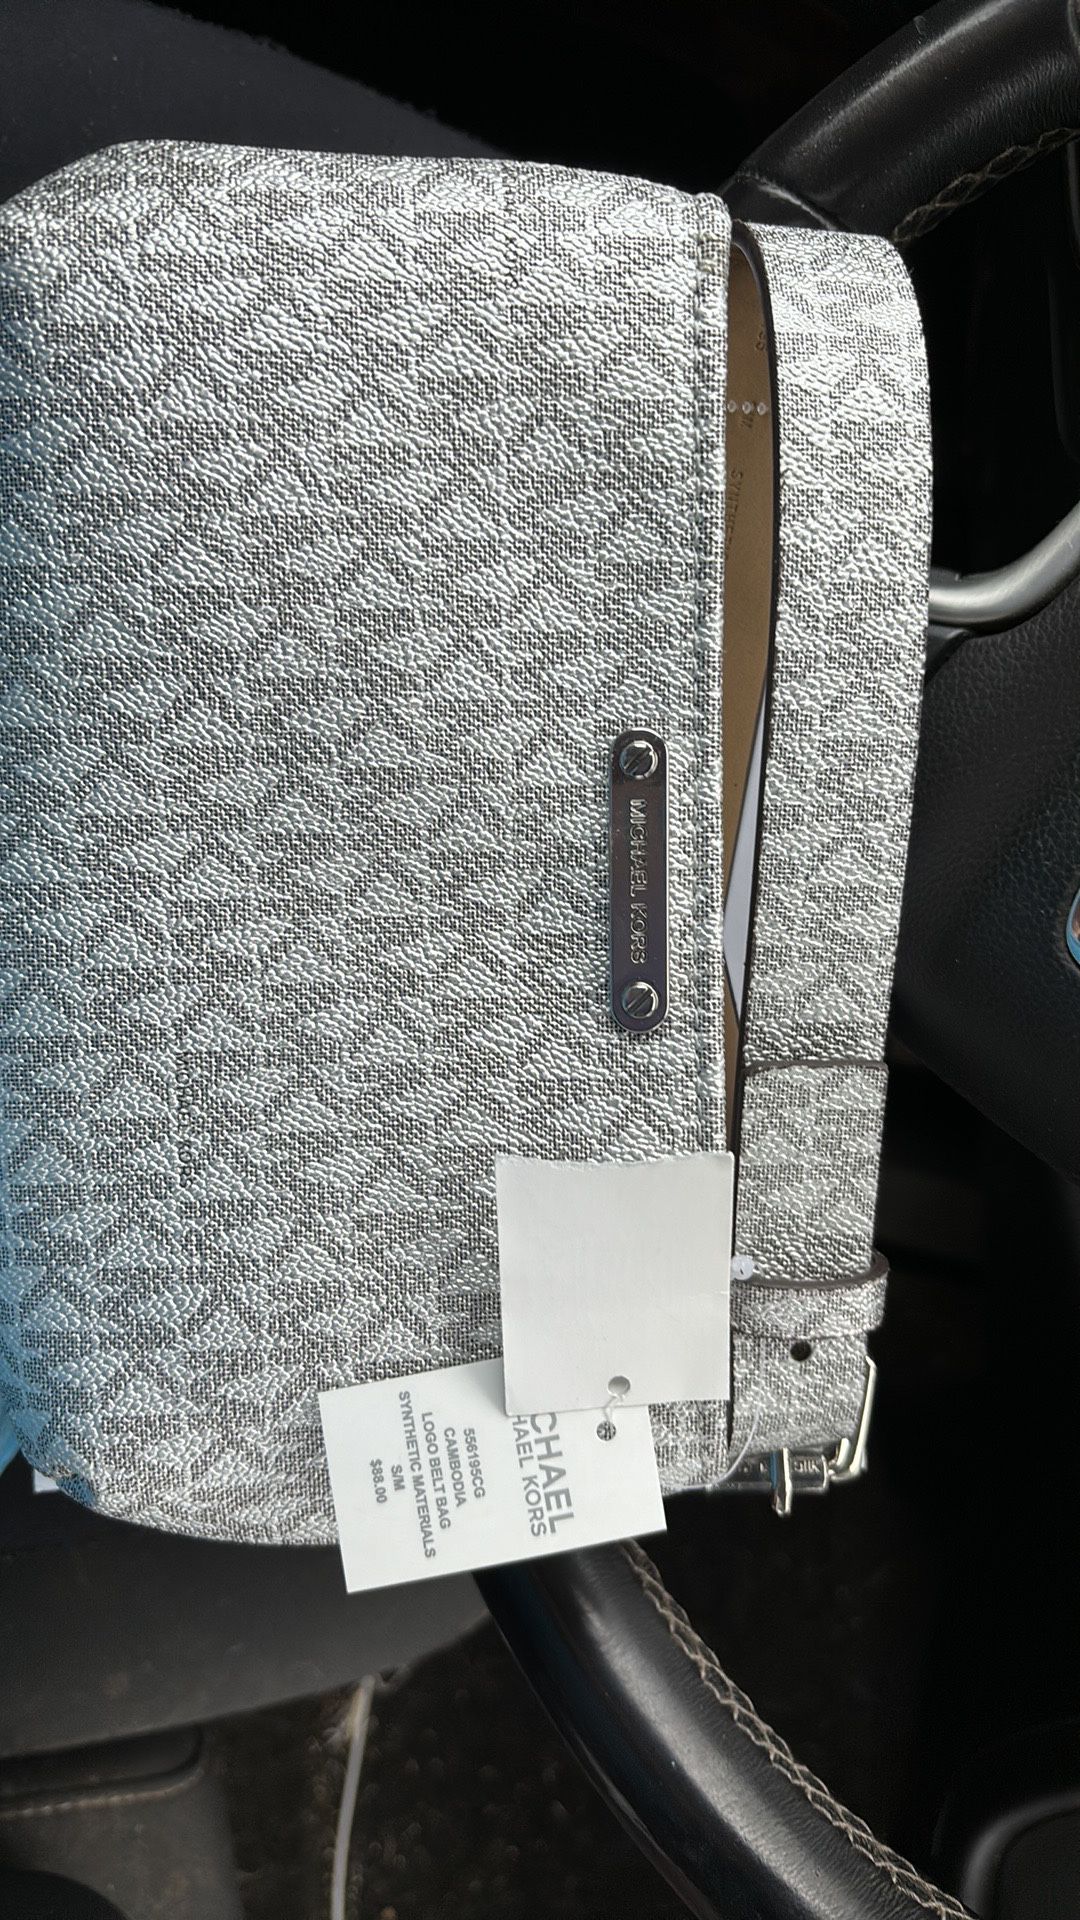 Michael Kors belt bag nwt brand new belt bag